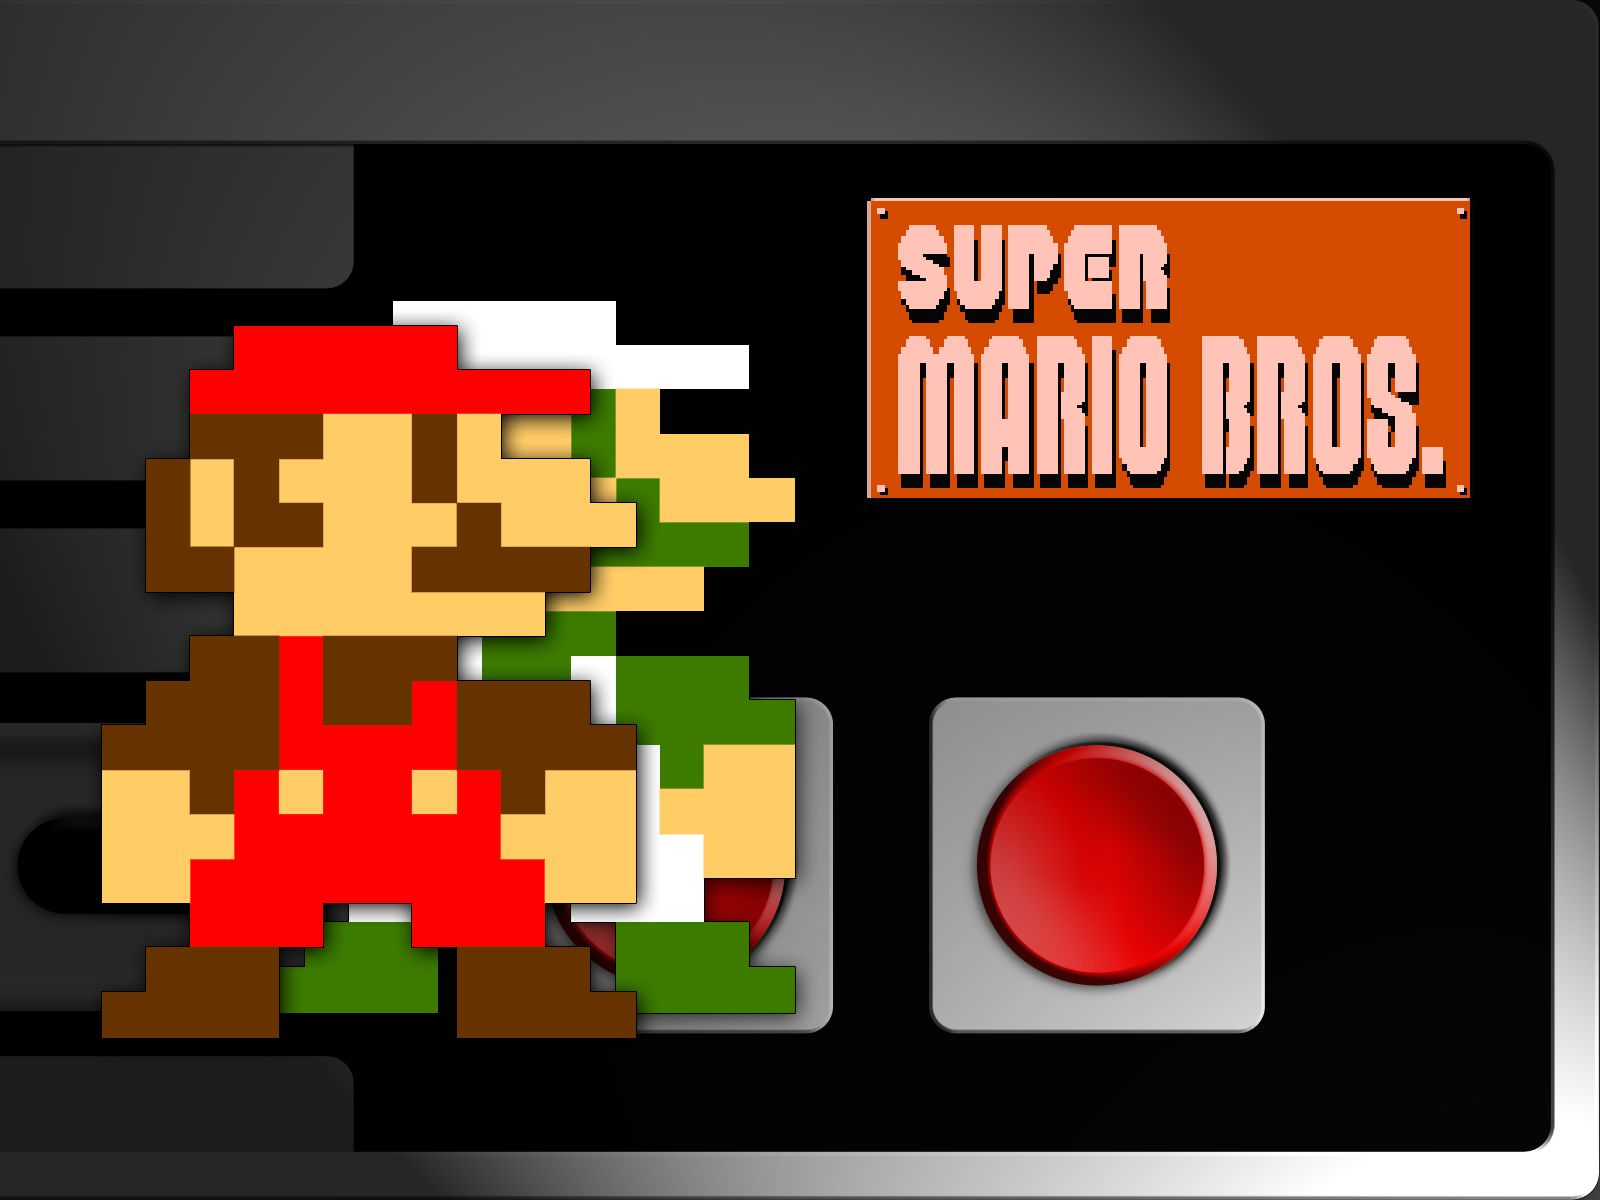 Super Mario Bros game on the Nintendo Entertainment System. - Super Mario